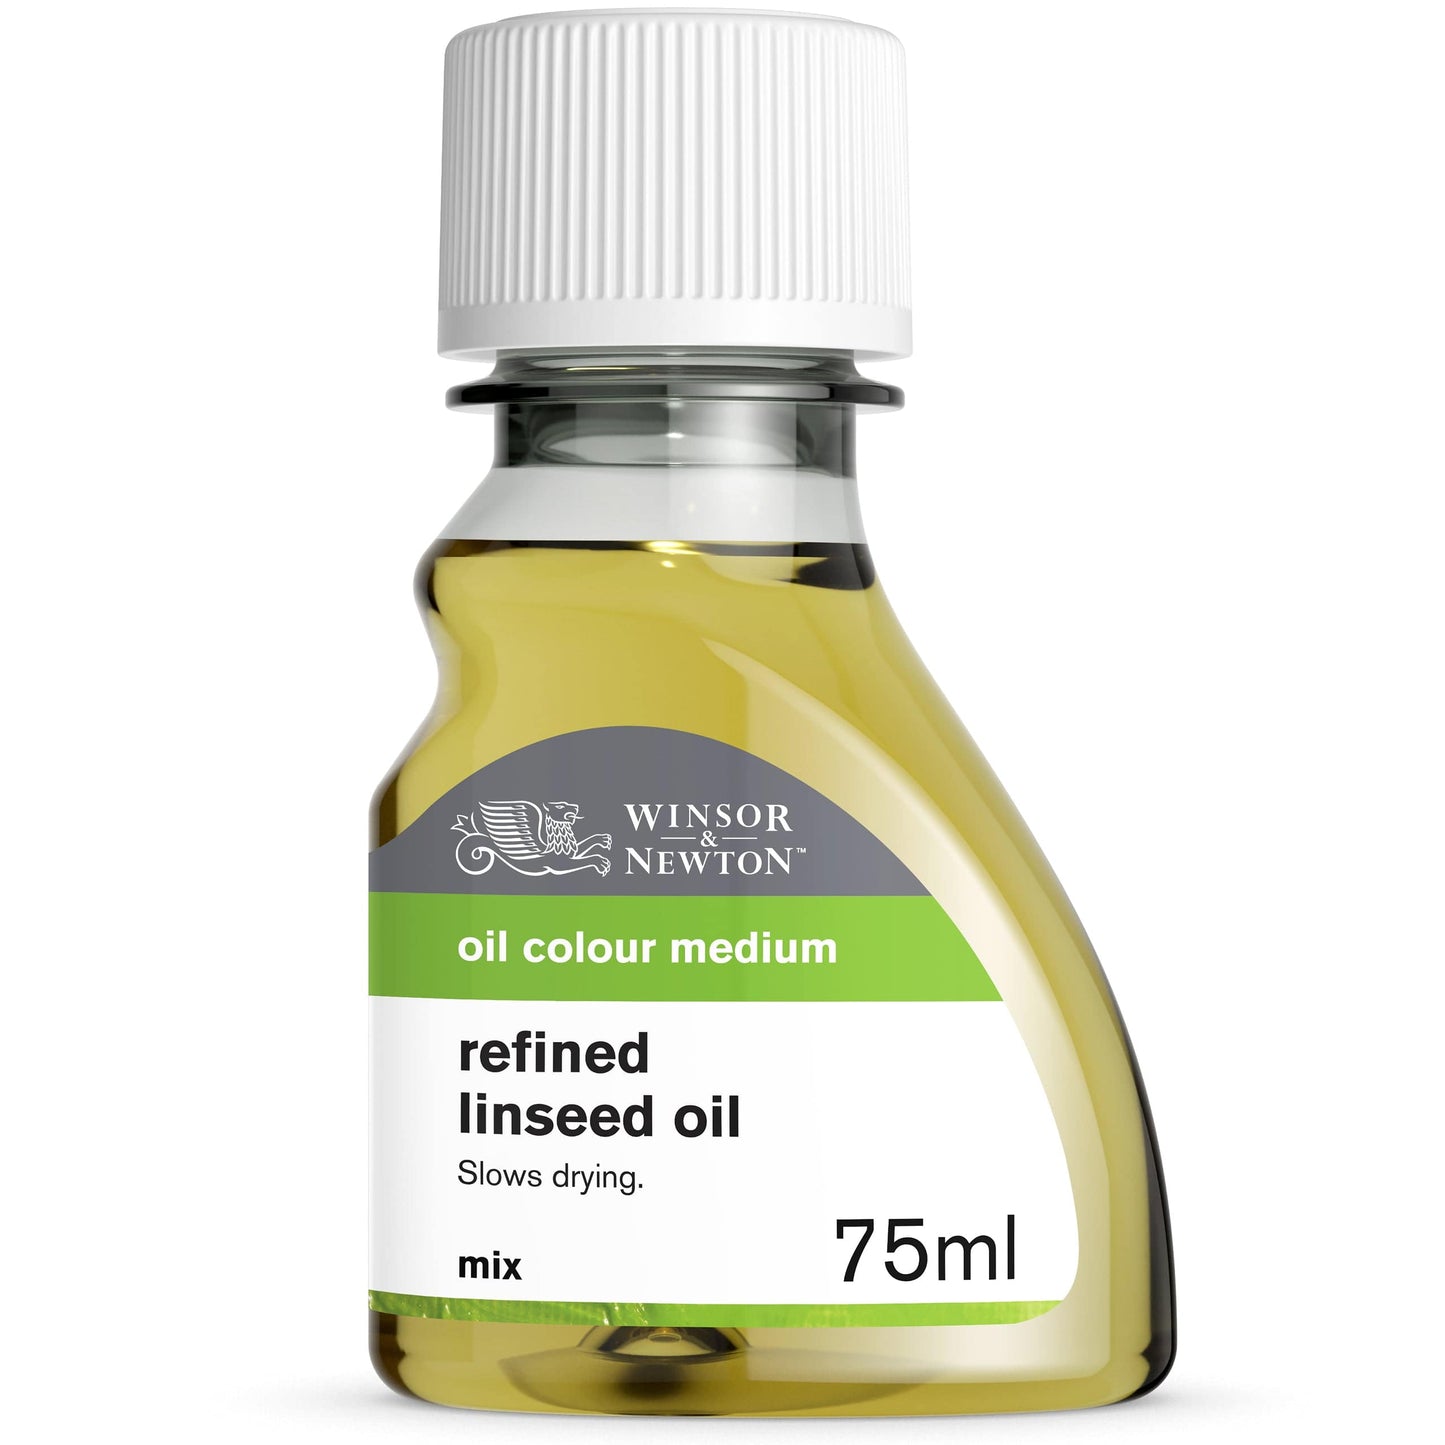 Winsor & Newton Oil Colour Medium Winsor & Newton - Refined Linseed Oil - 75mL Bottle - Item #2721748